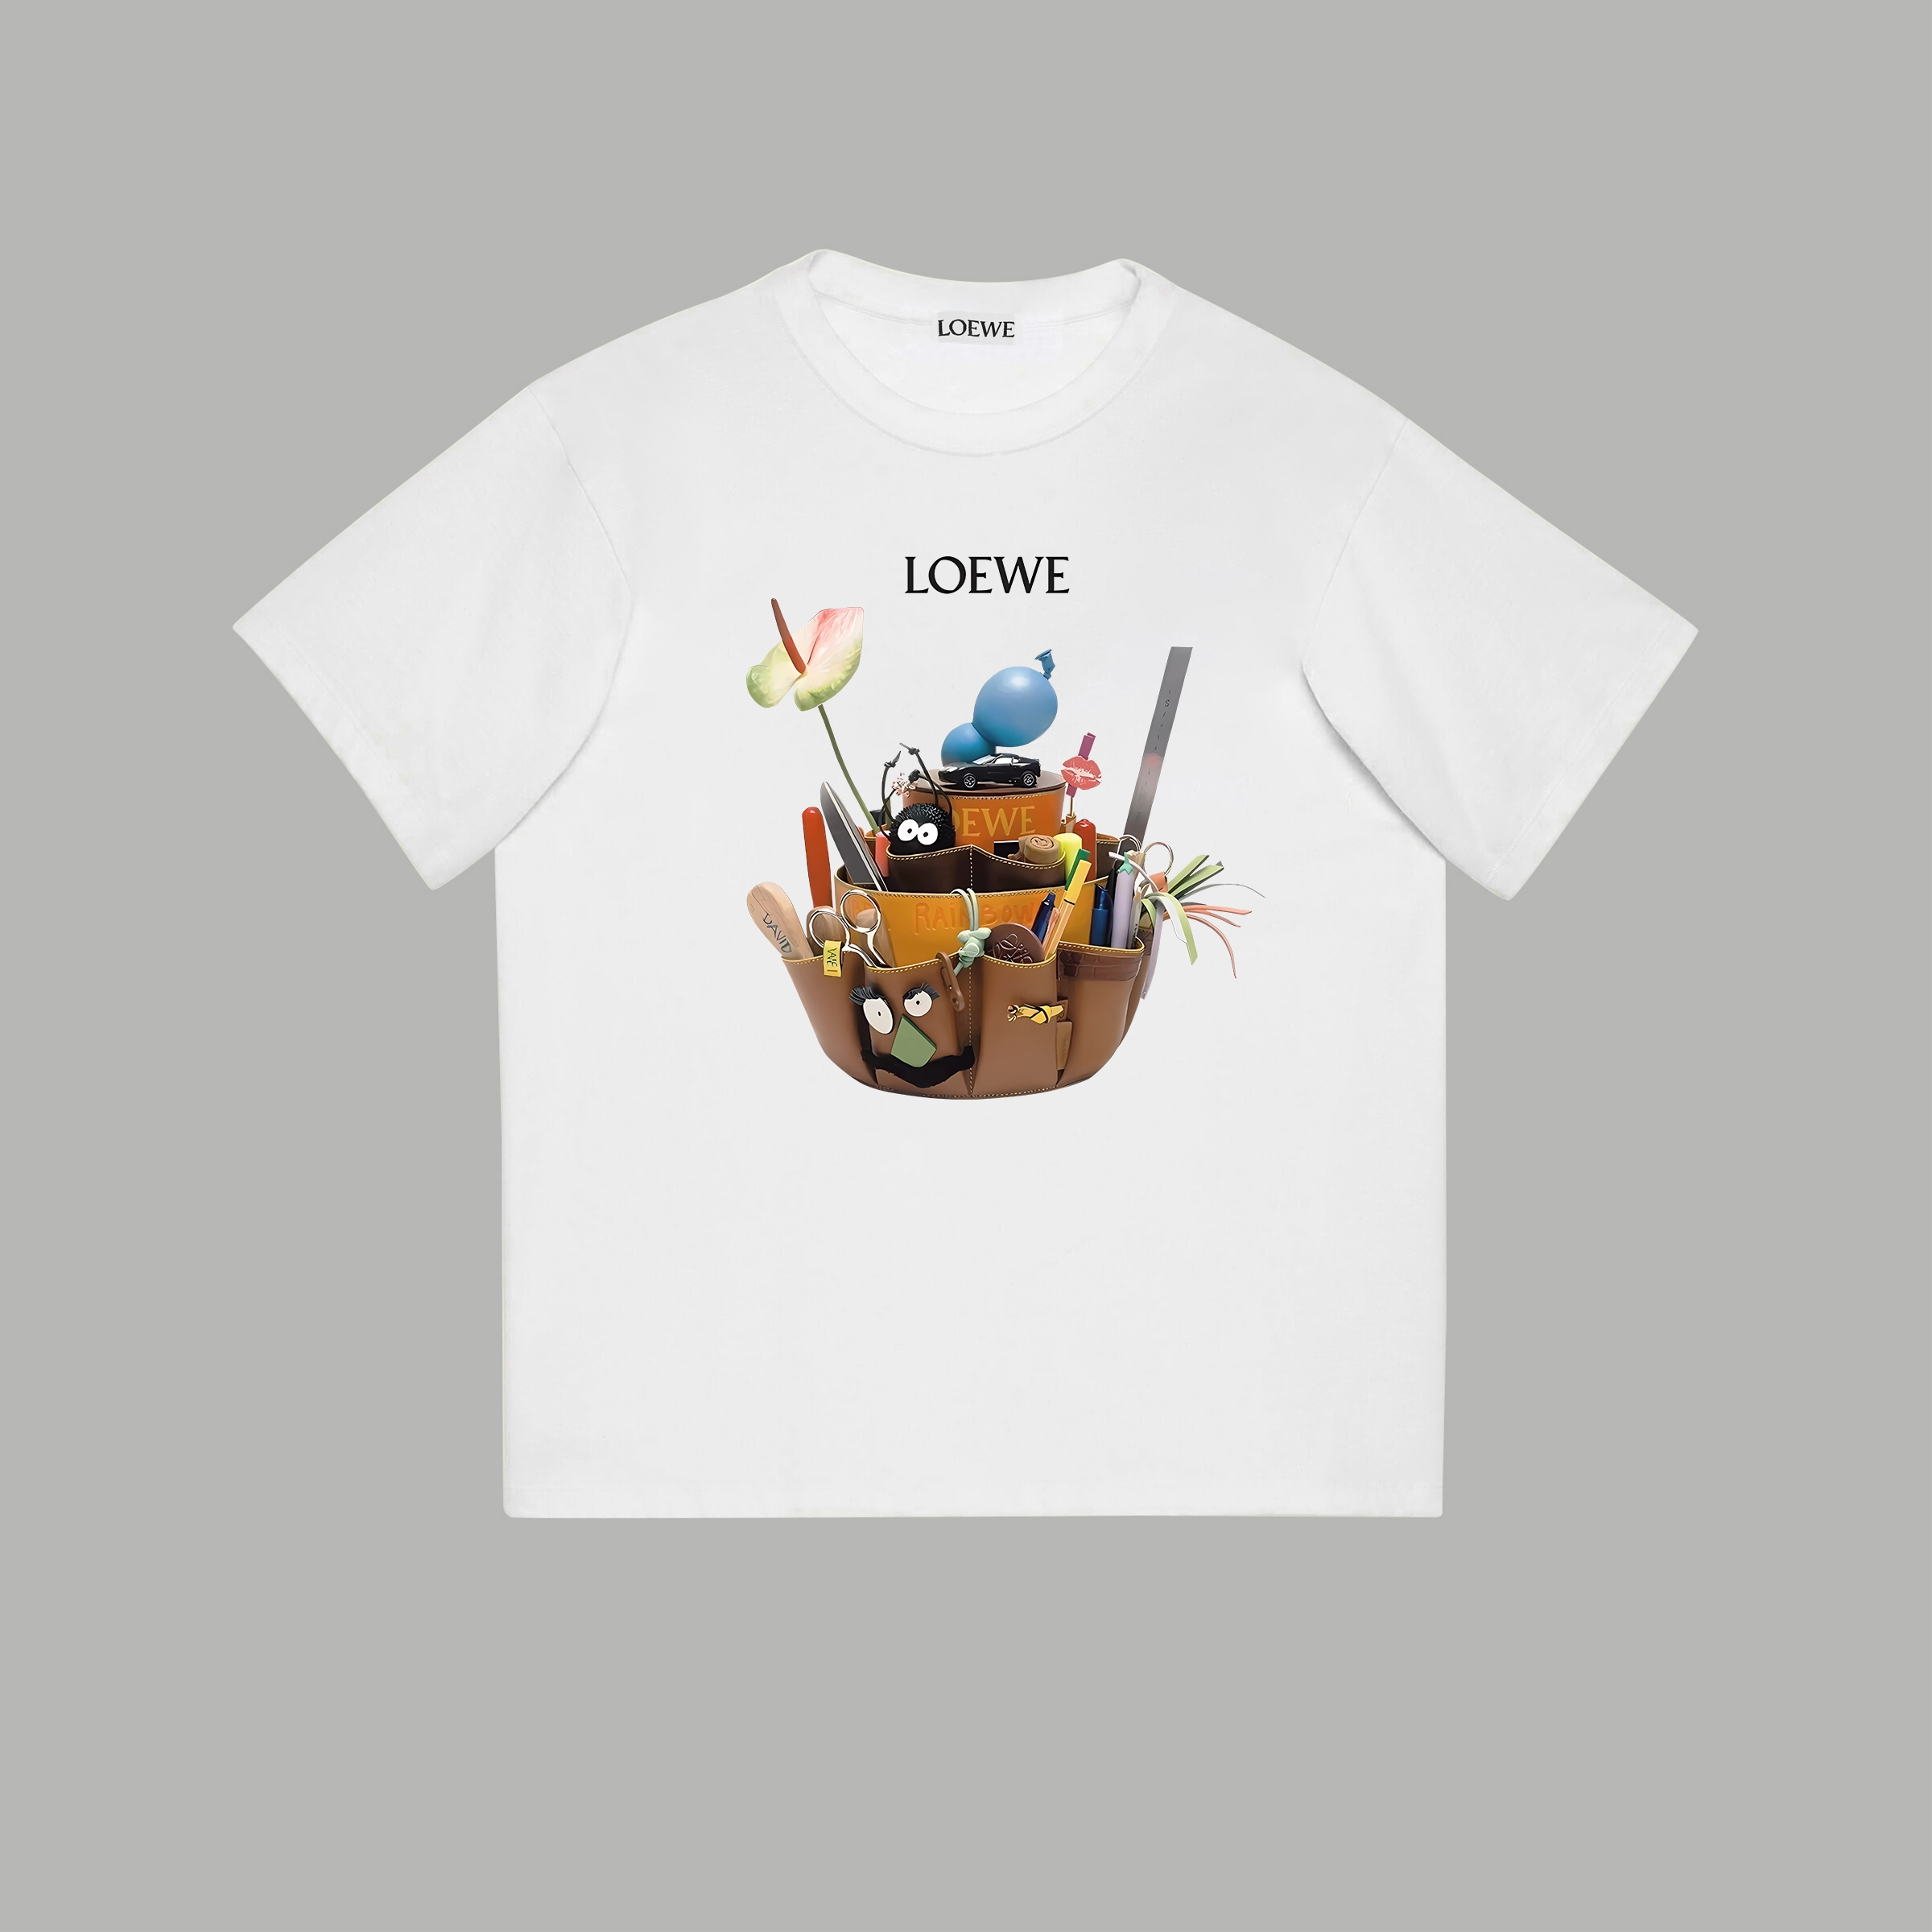 Loewe Clothing T-Shirt Printing Unisex Cotton Short Sleeve